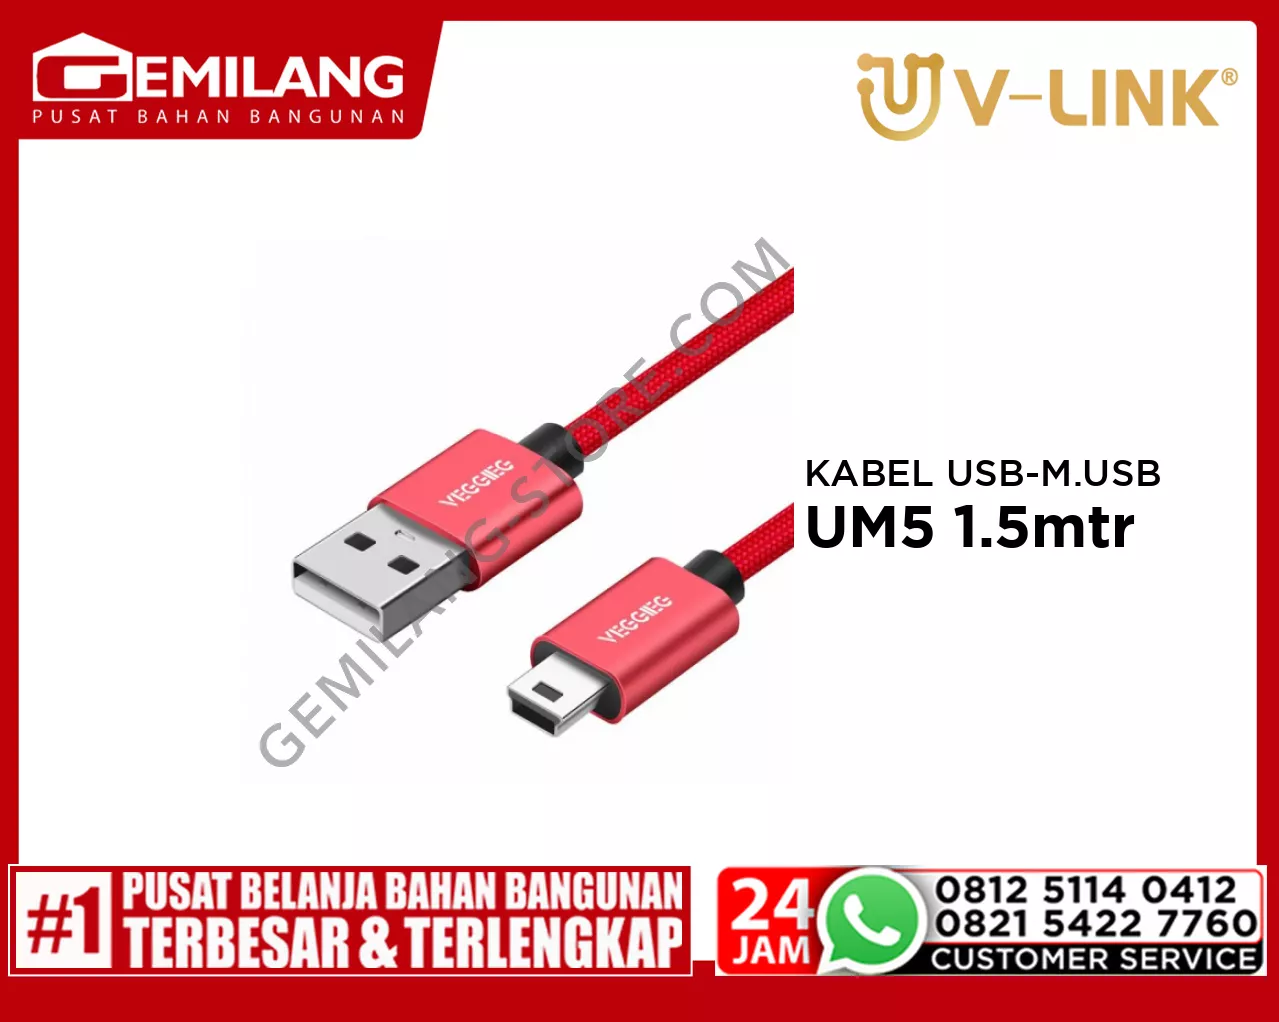 V-LINK KABEL USB TO MINI USB 5 PIN RED VEGGIEG UM5 1.5mtr